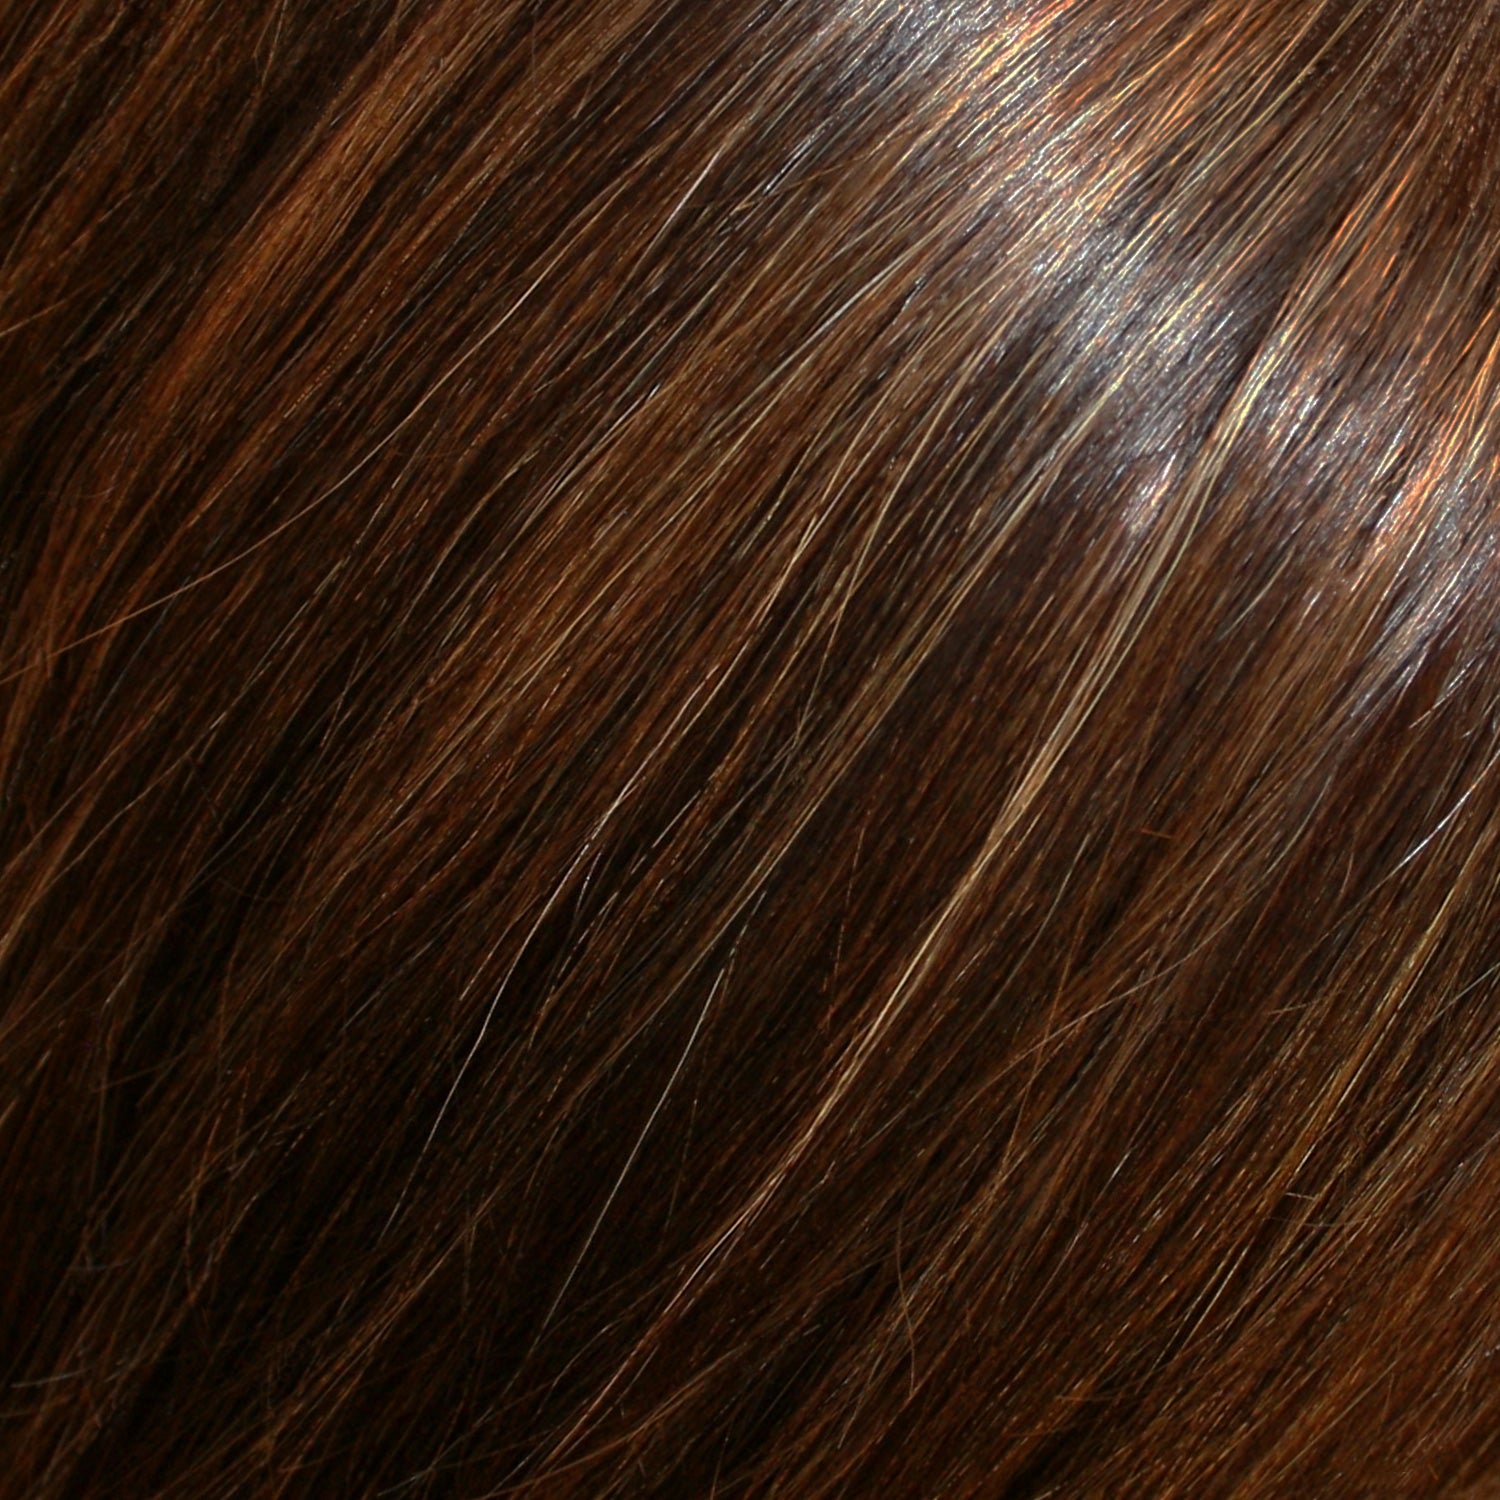 Perruque Cheveux Humains Naturels Avec Mèches Jon Renau Blake Couleur Chocolat fs-4-33-30a